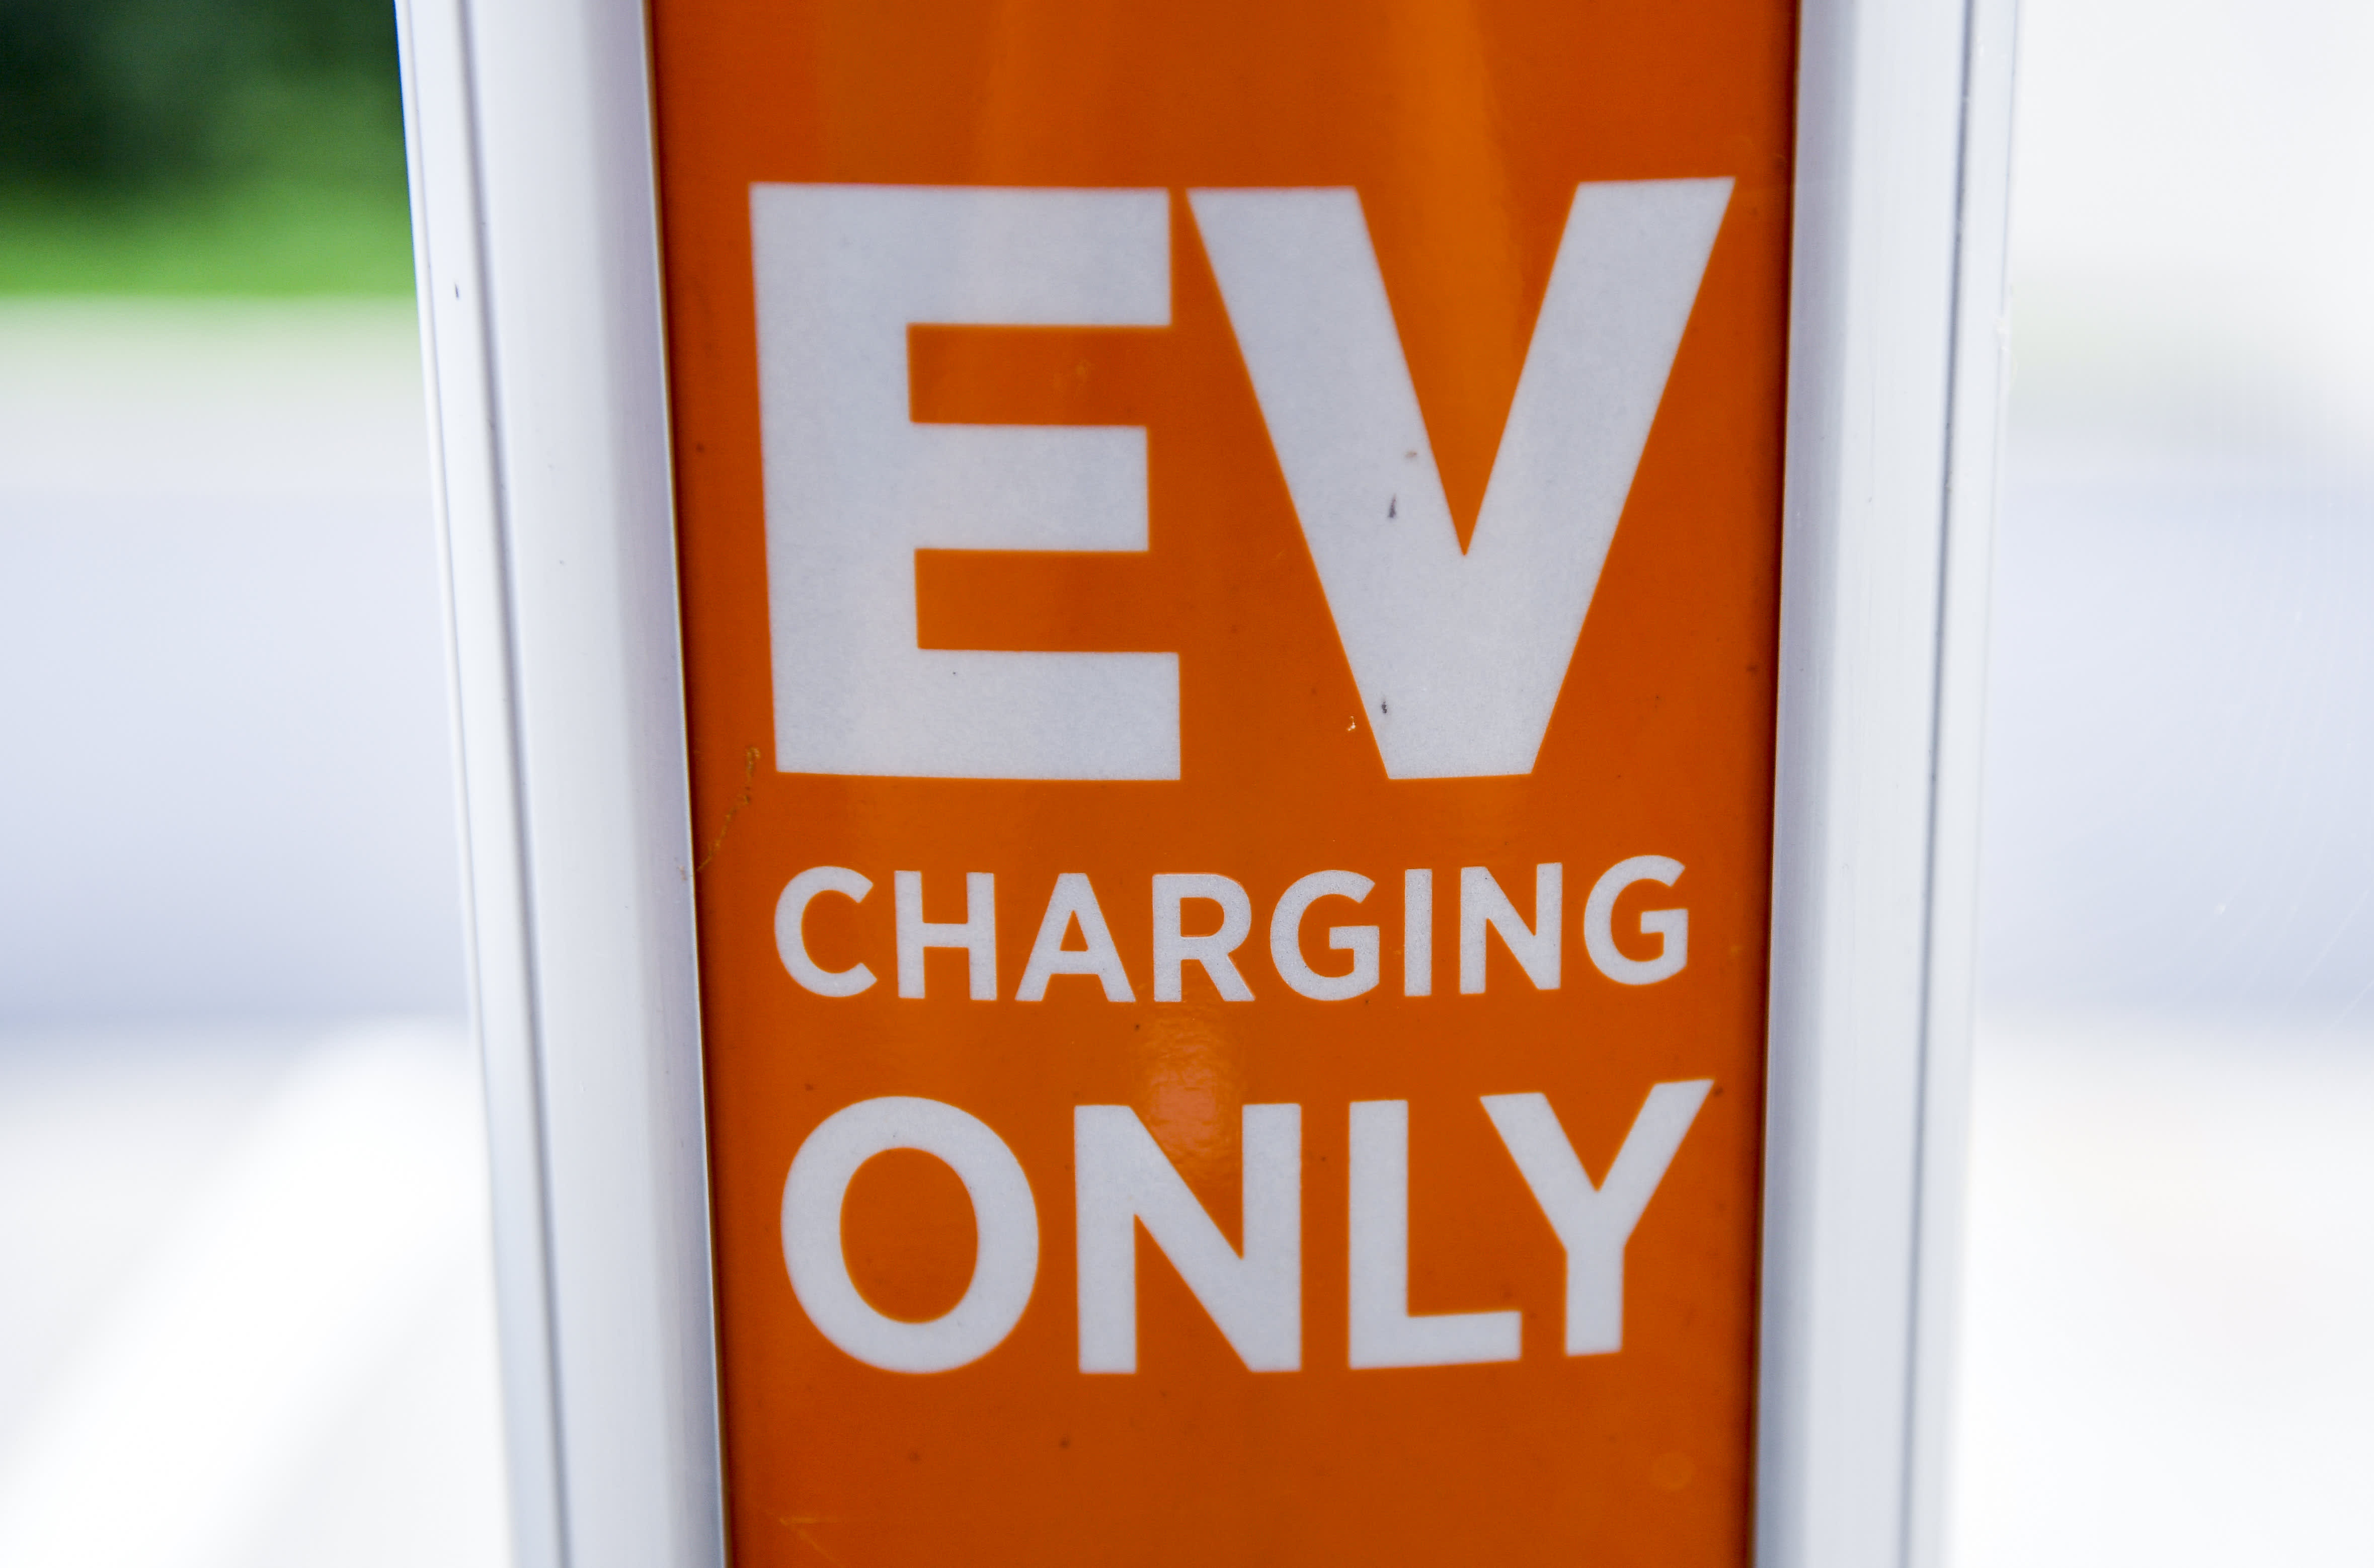 Investing in EV, batteries: Fund manager reveals his top EV picks 